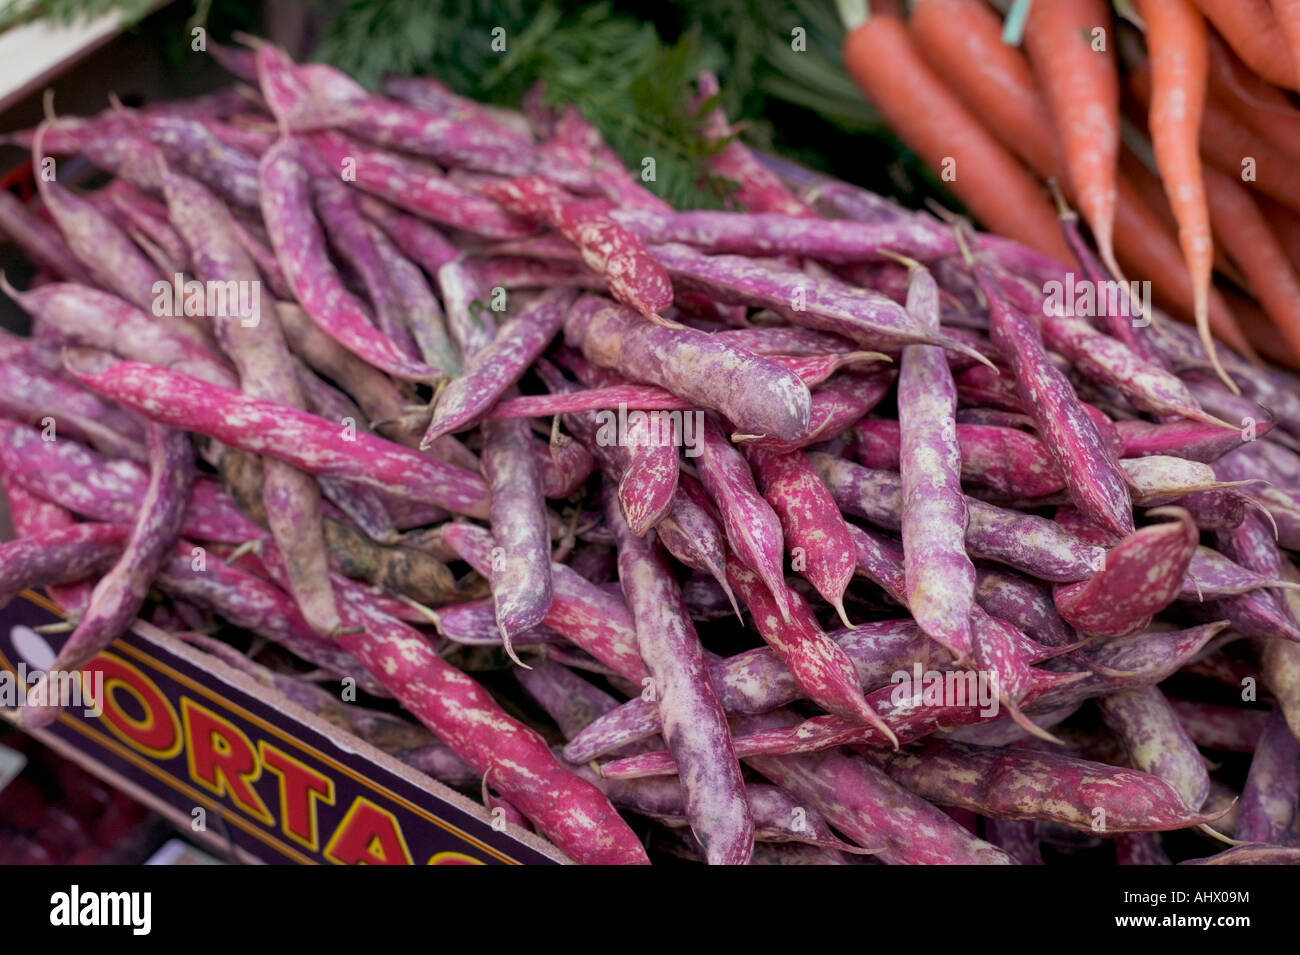 Borlotti (cranberry) beans in pods. Stock Photo